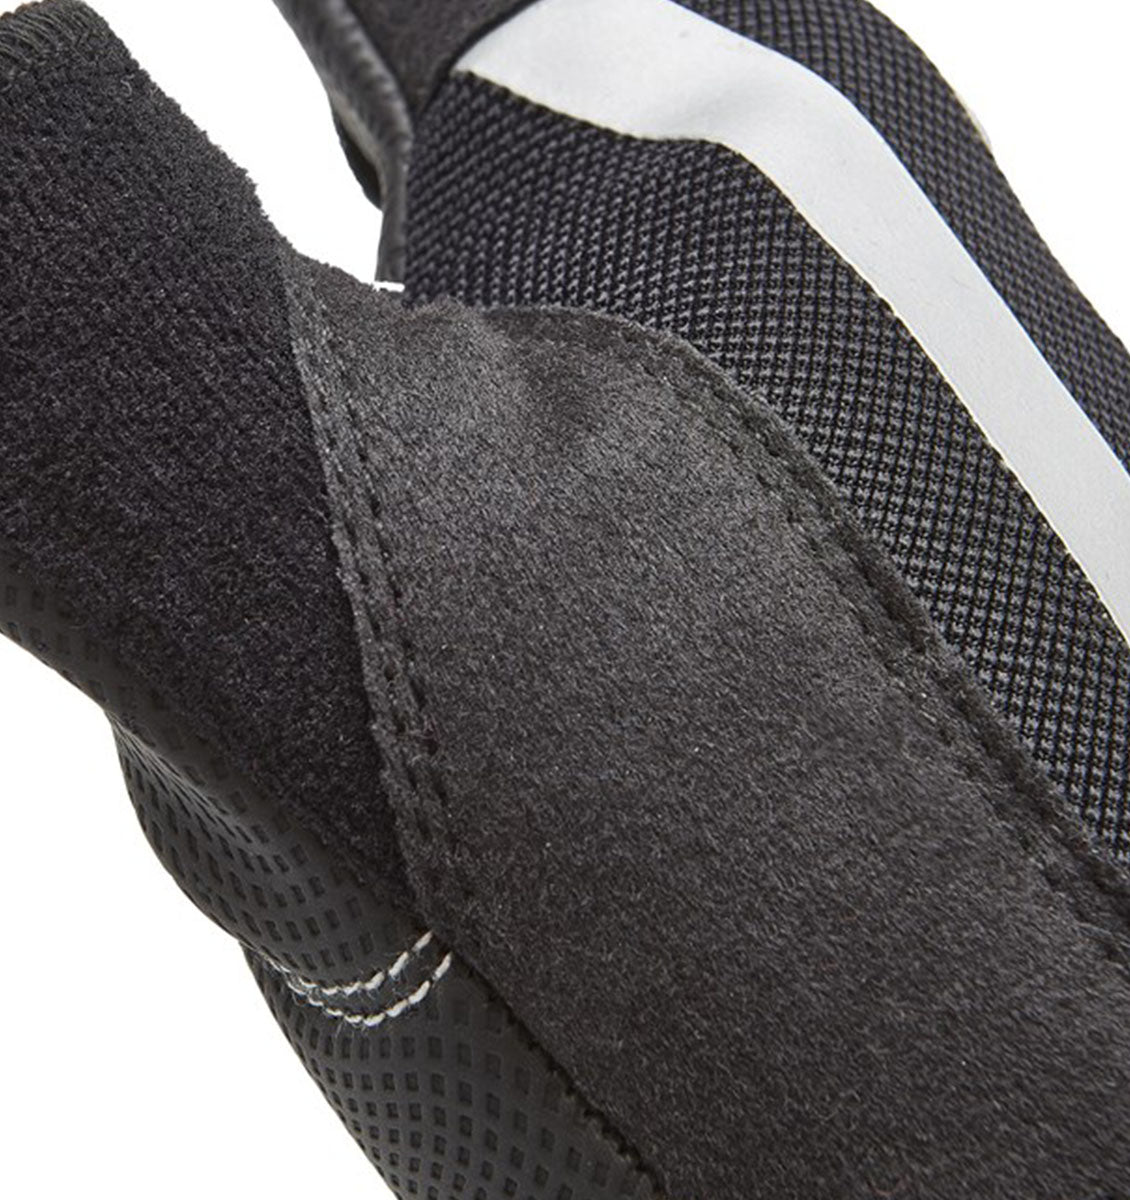 adidas Elite Training Gloves - Black/Silver - 4